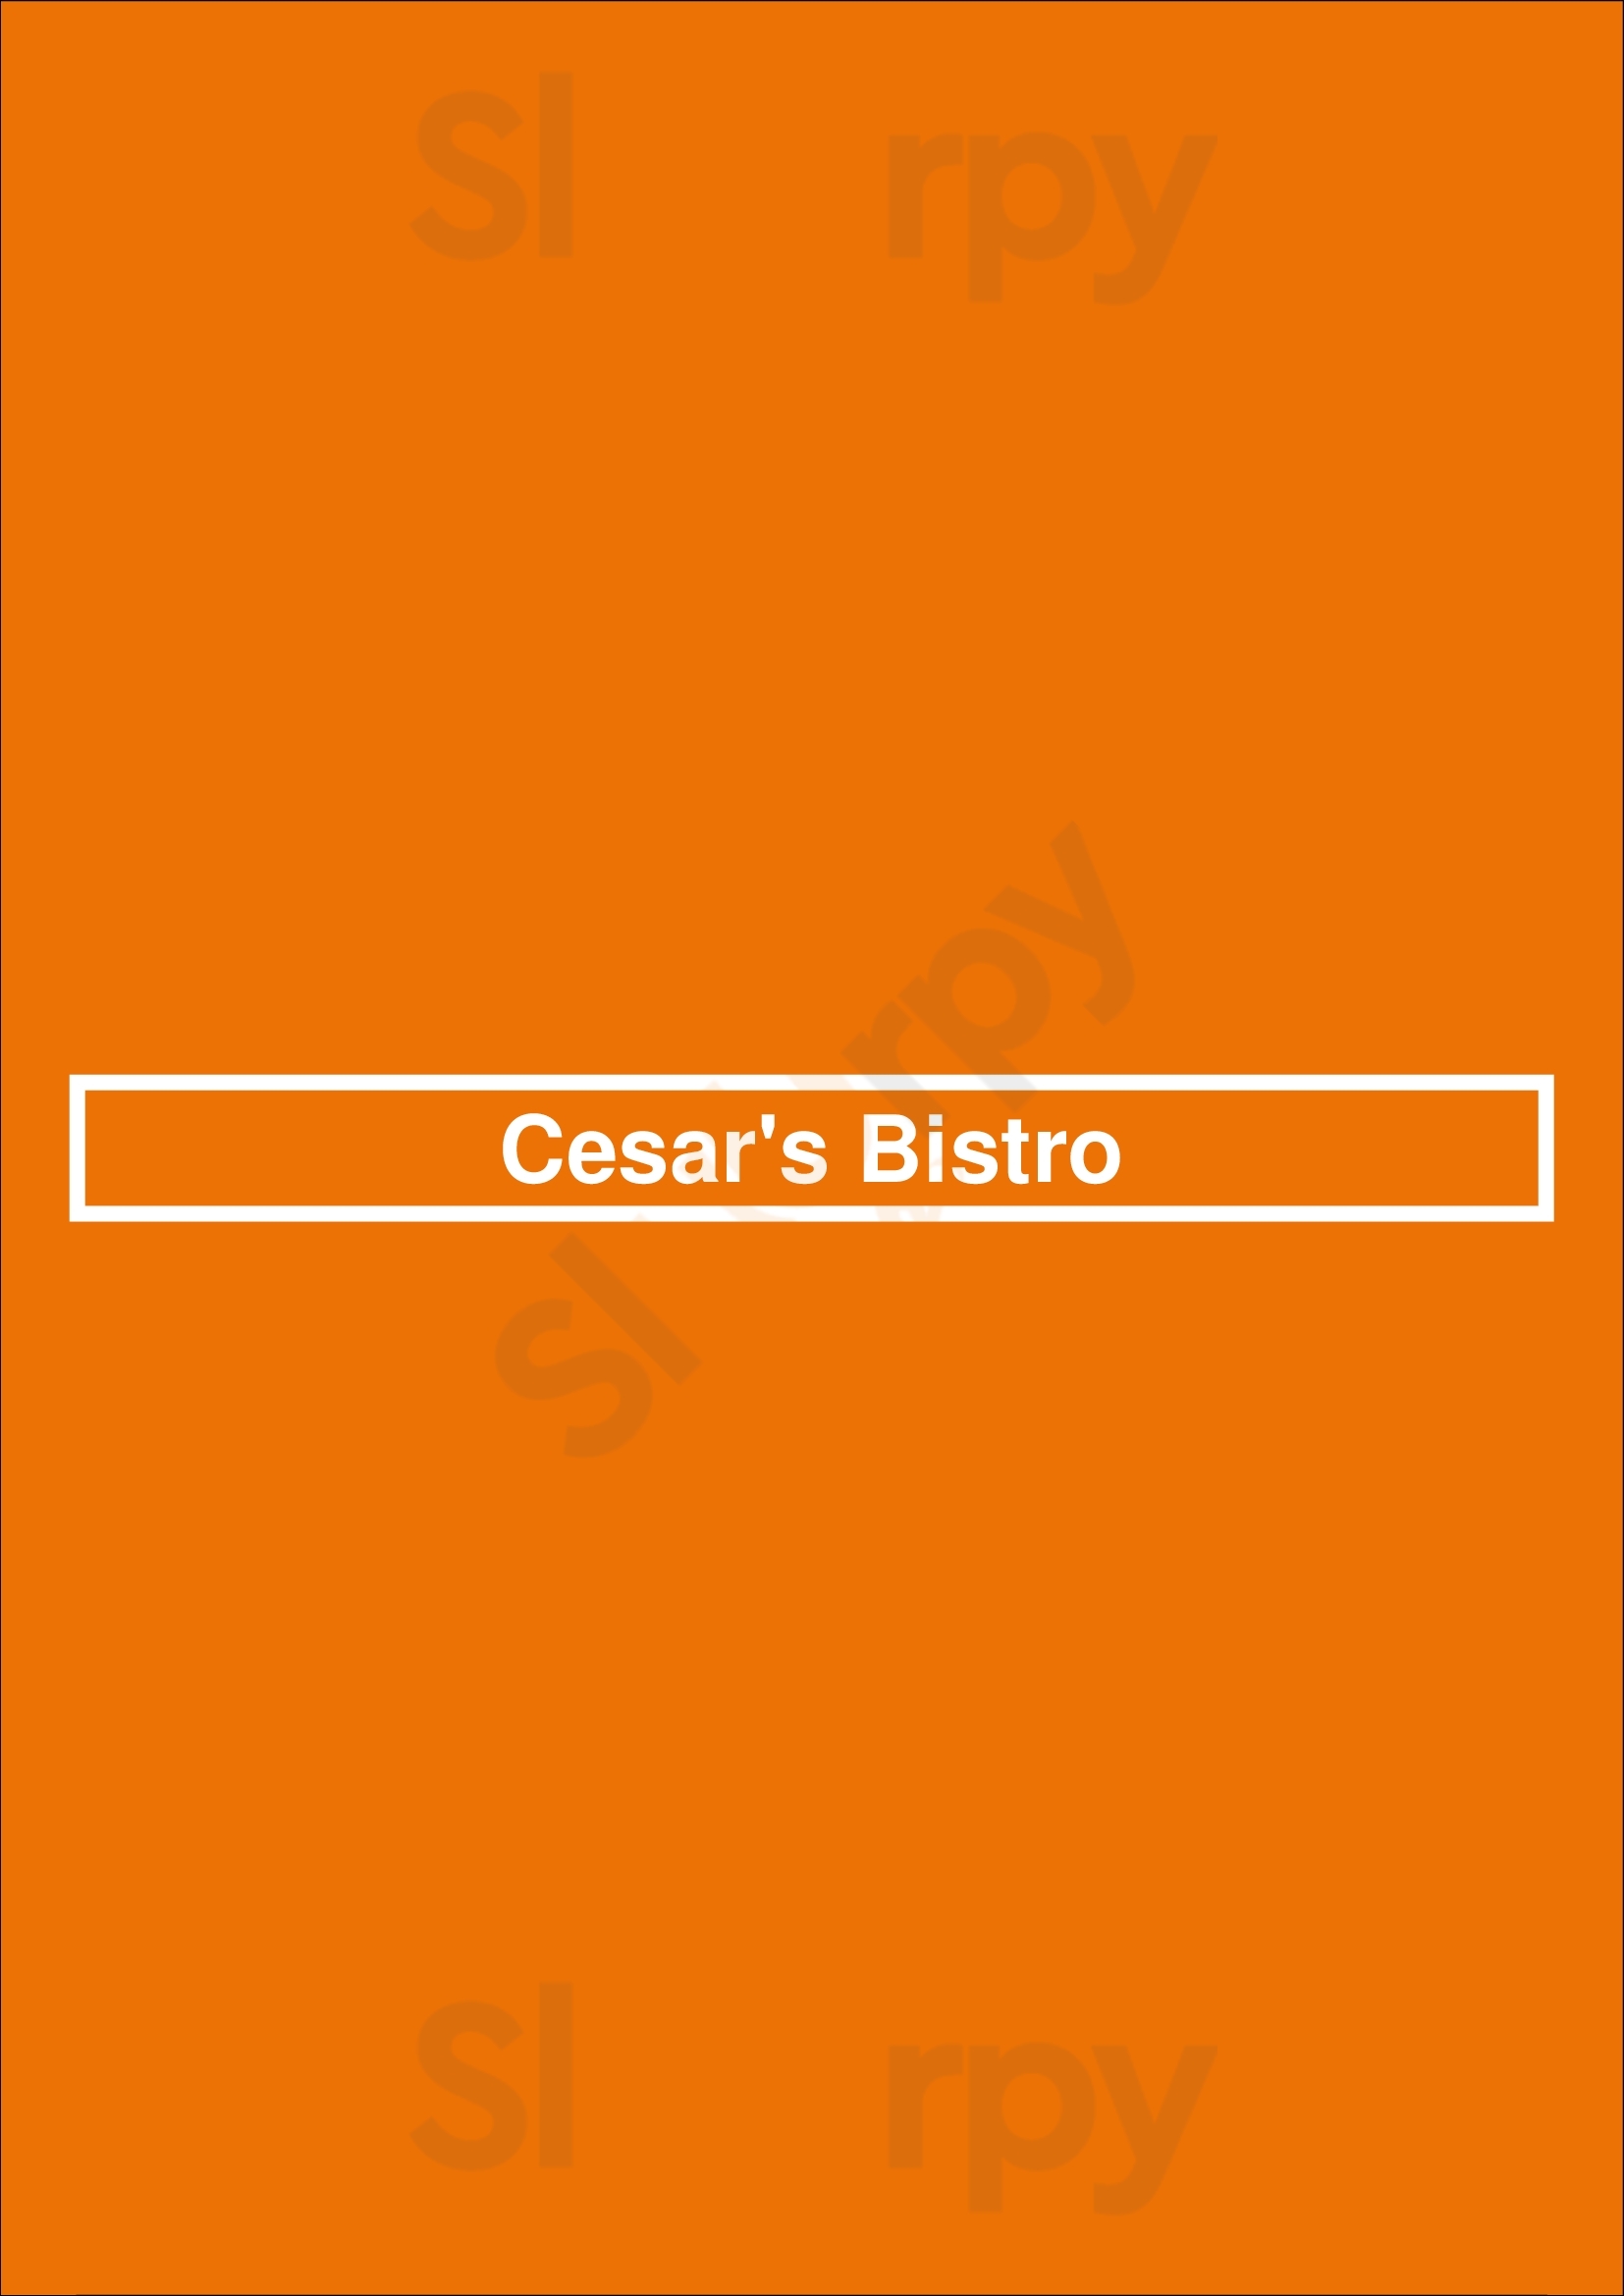 Cesar's Bistro Long Beach Menu - 1